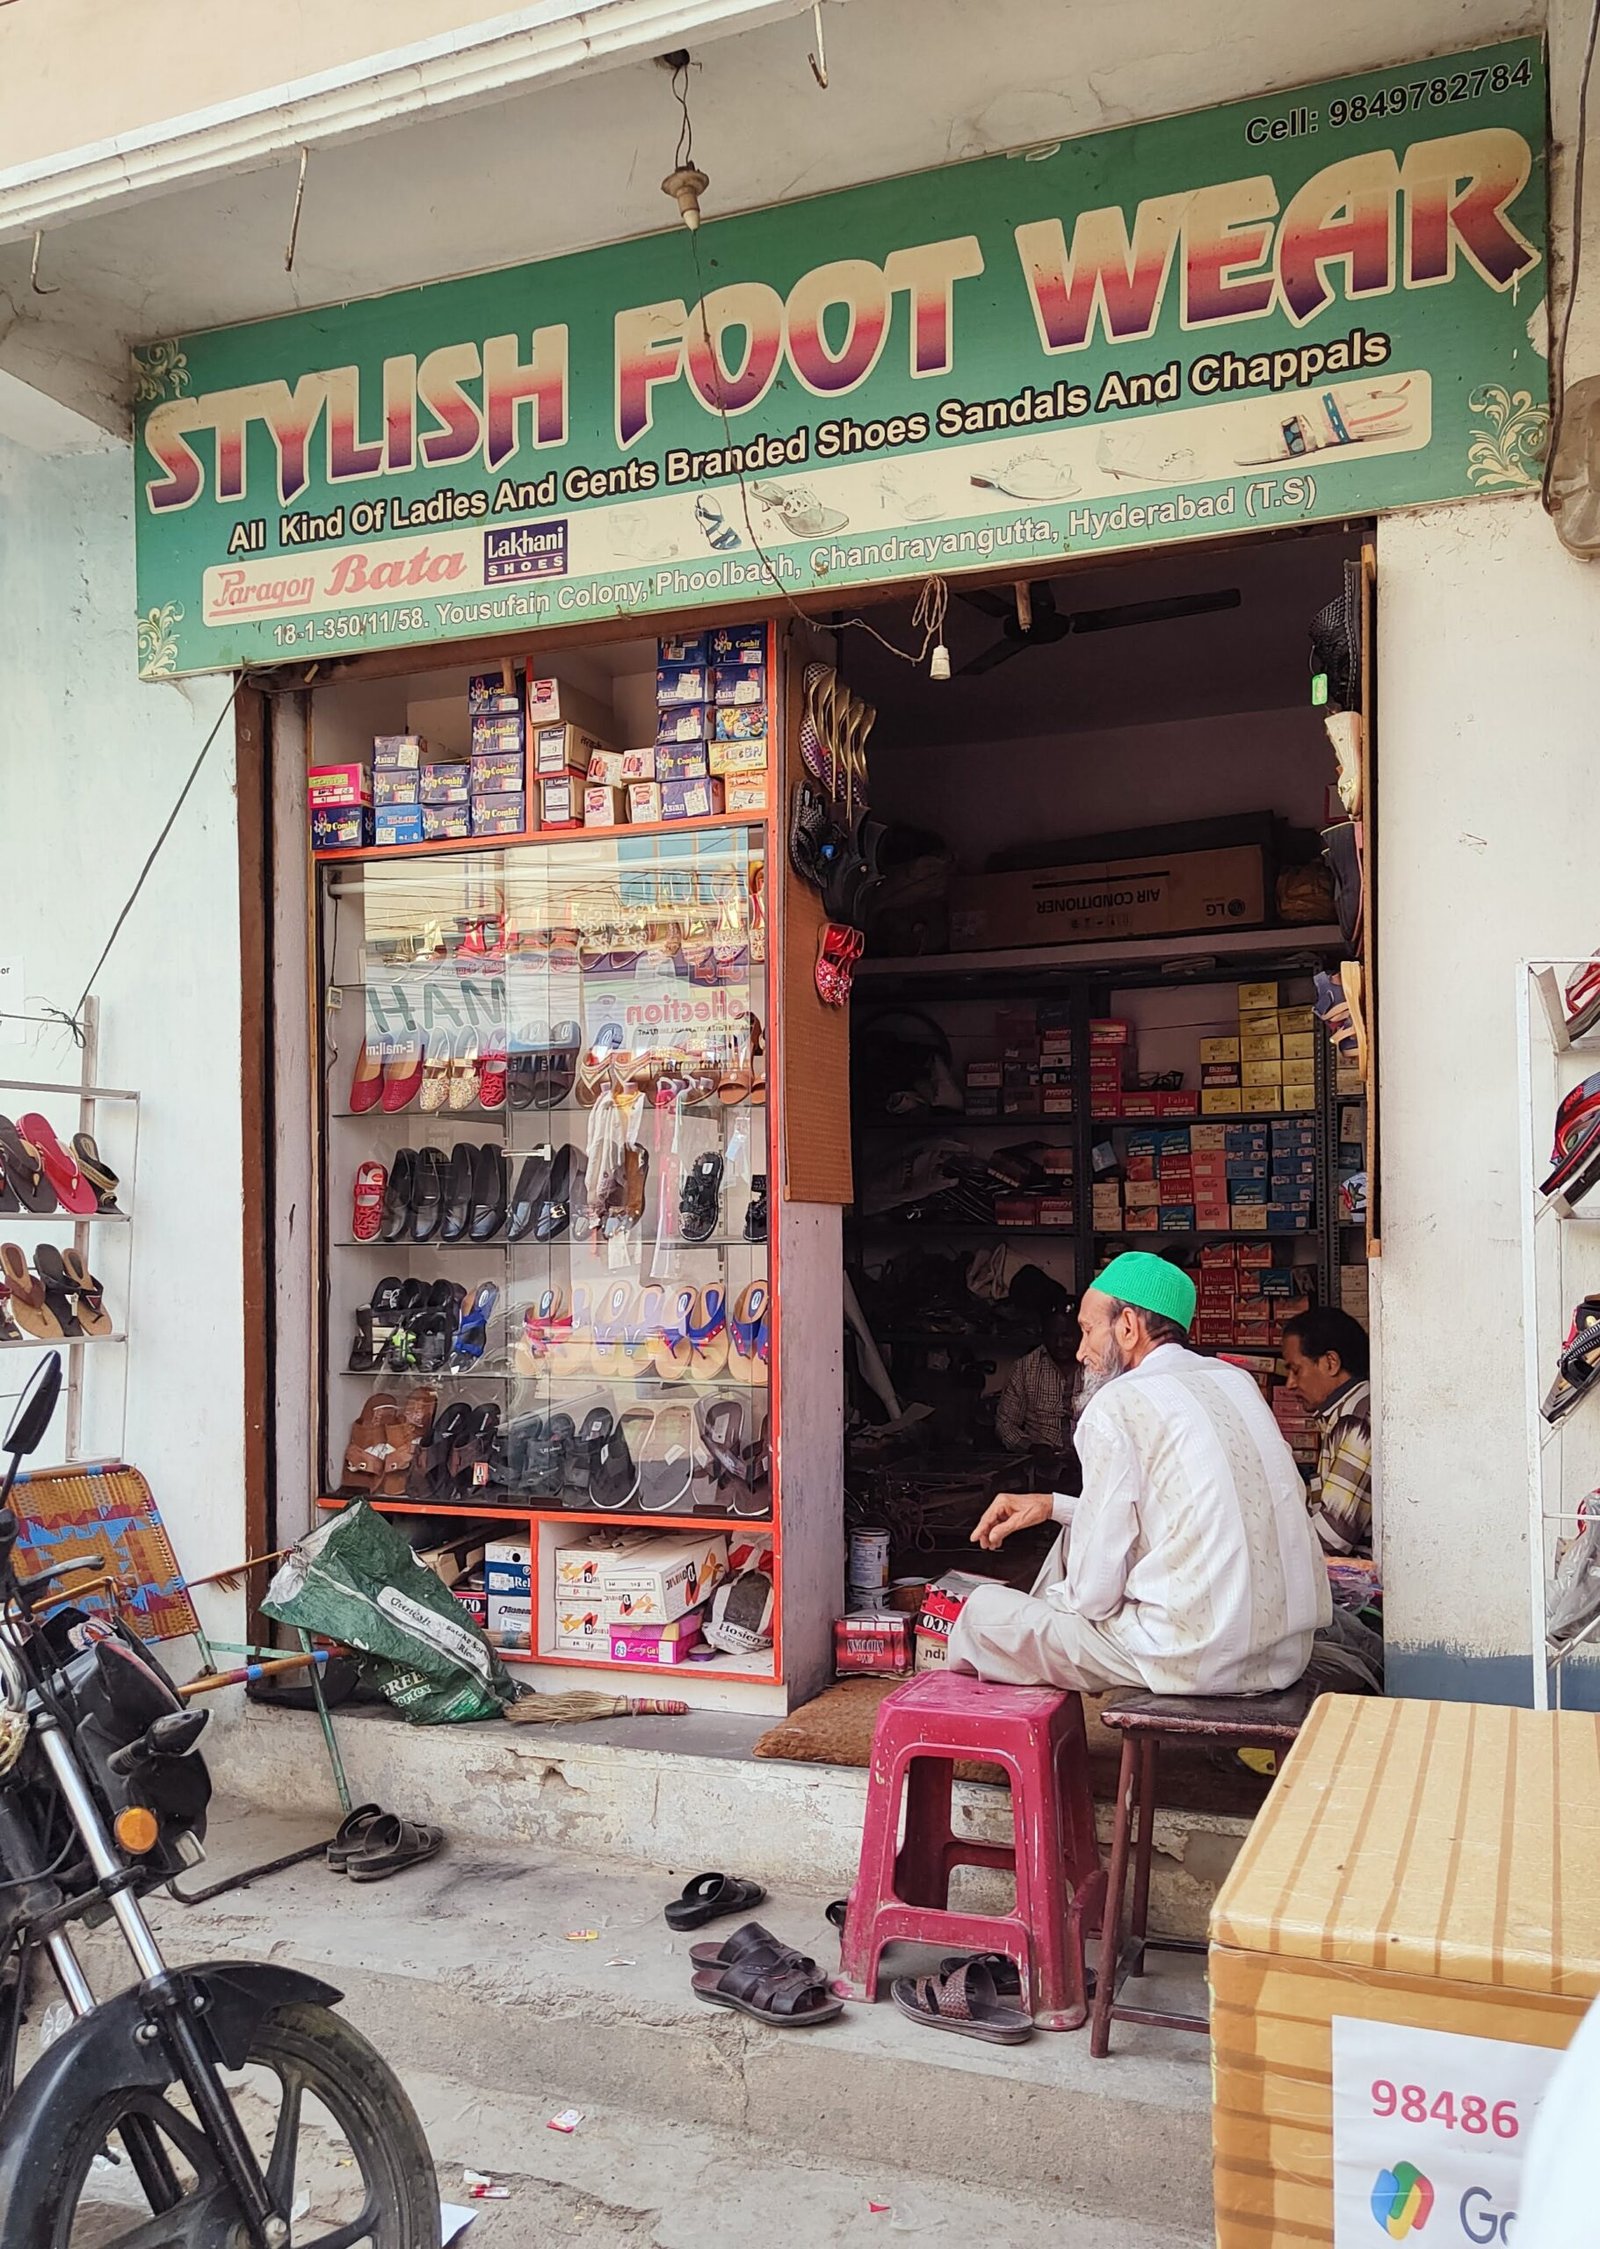 Stylish Foot Wear in Ghulsan Iqbal Colony